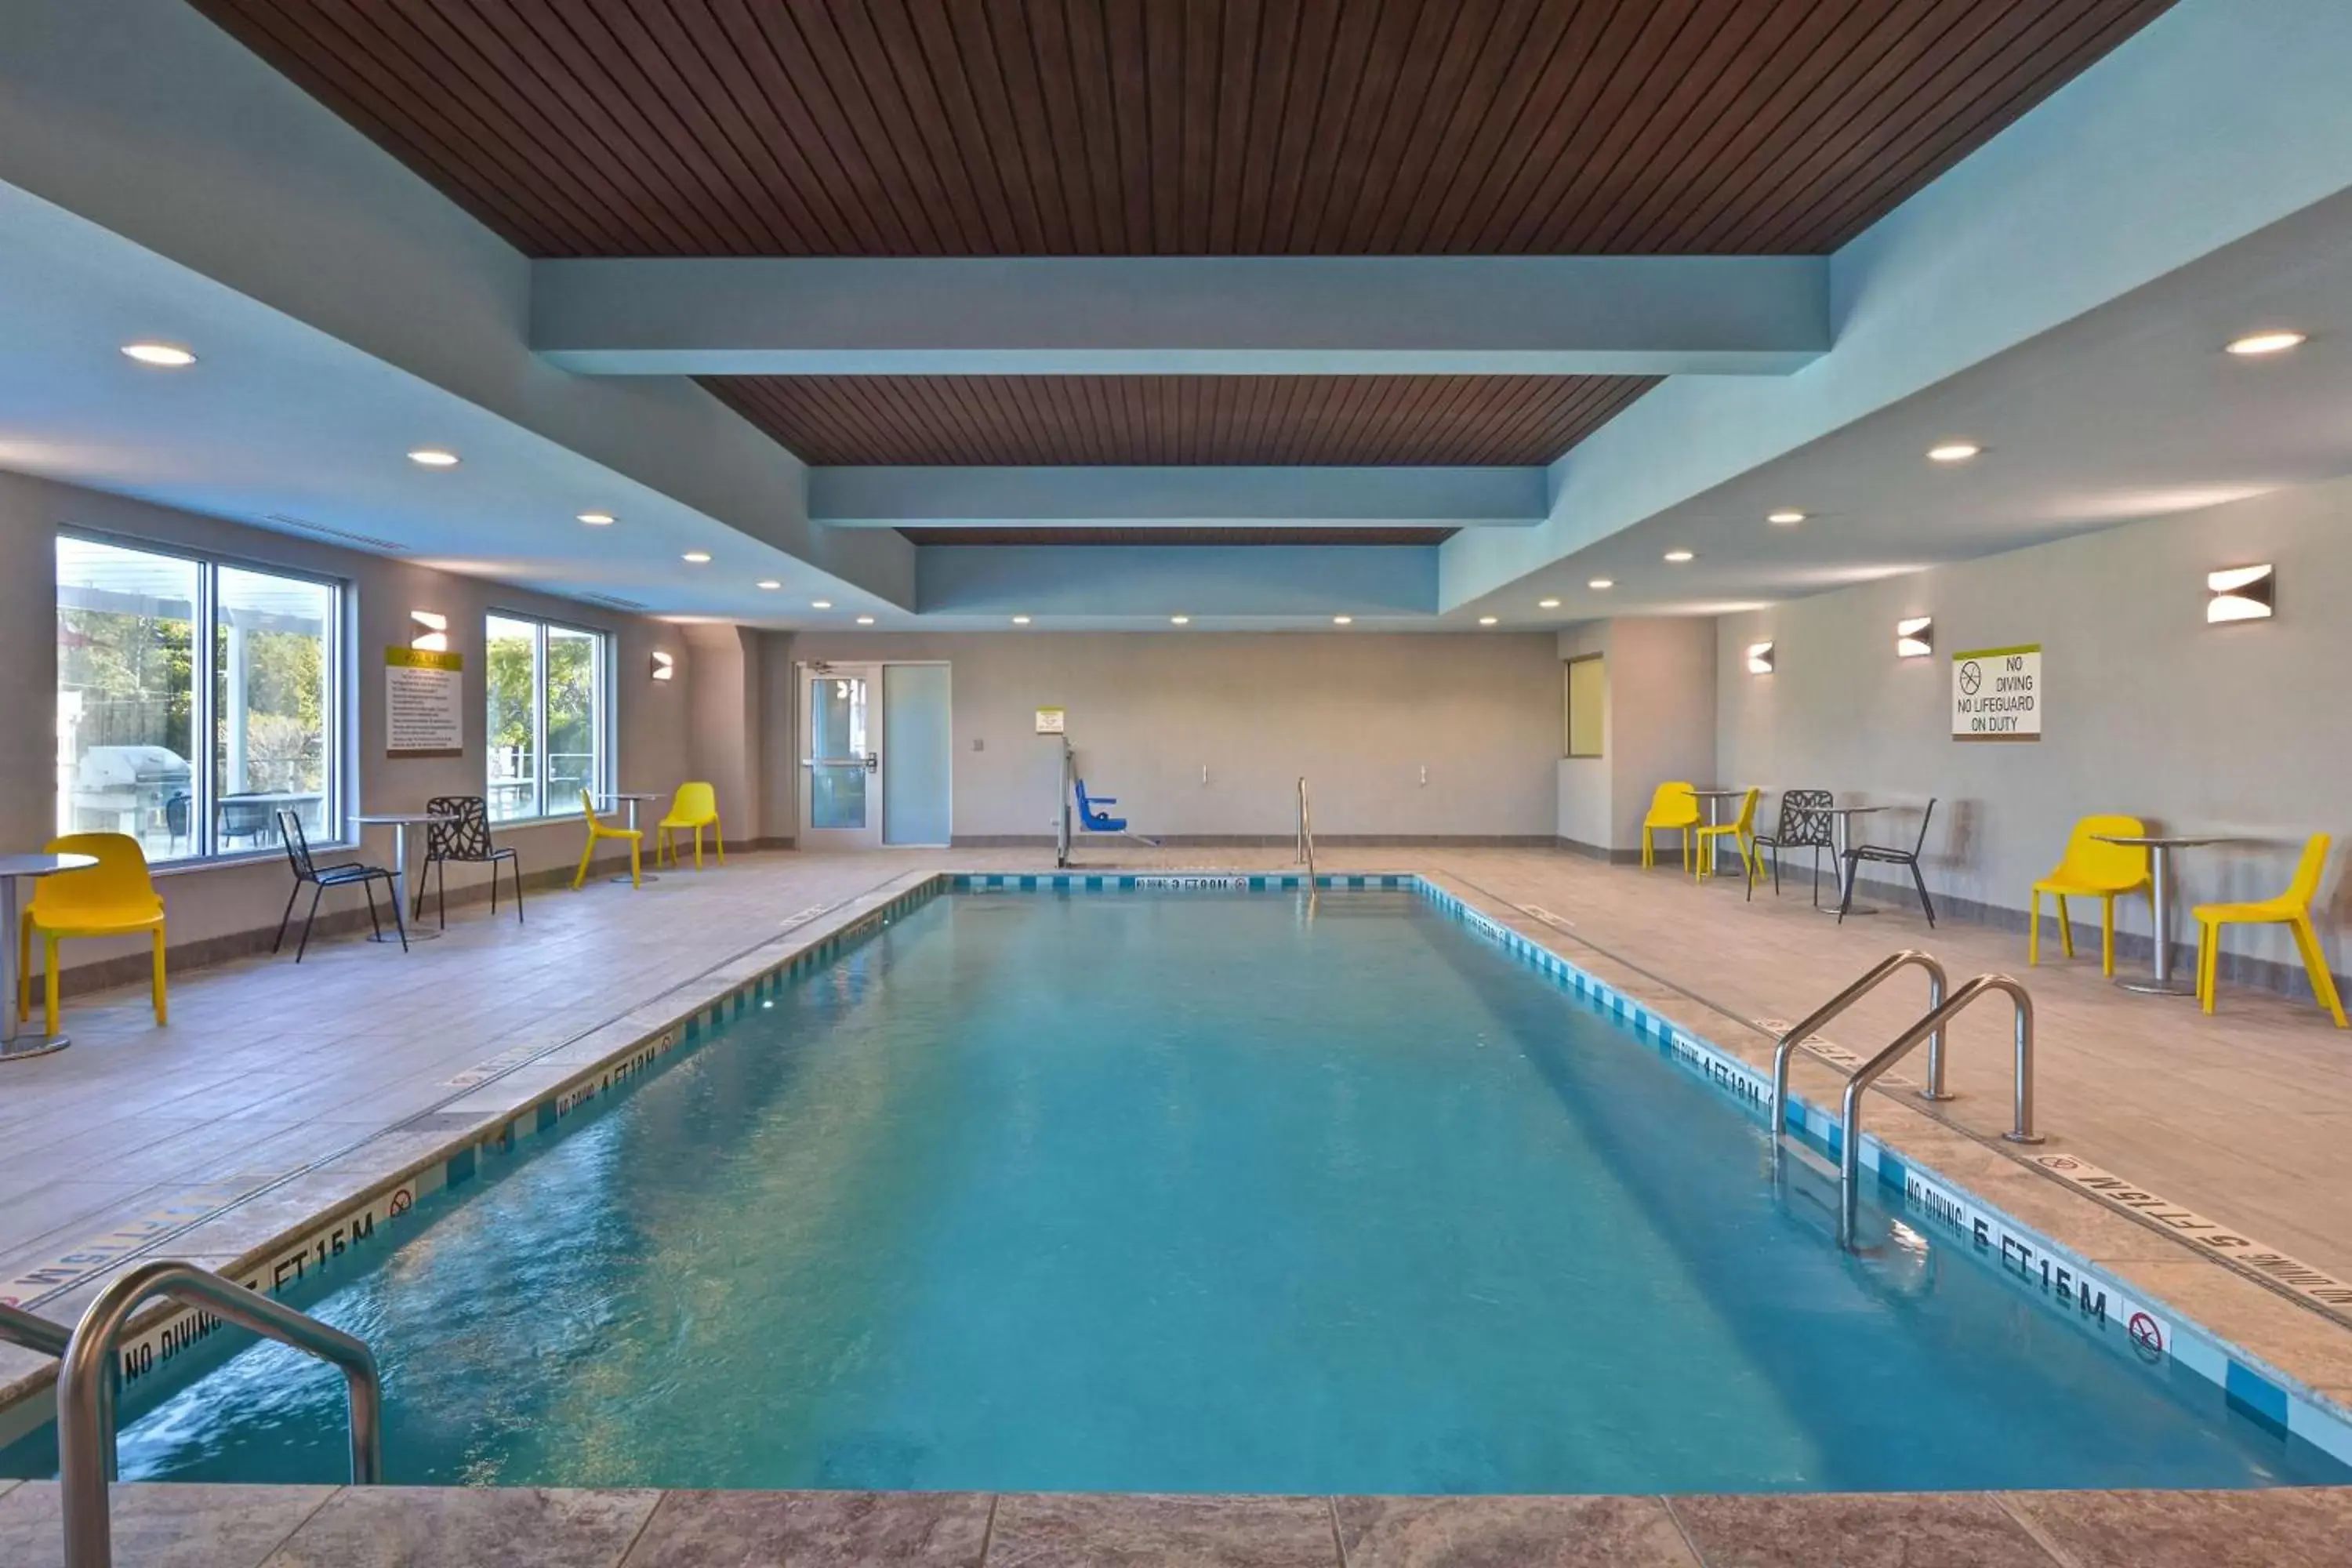 Swimming Pool in Home2 Suites By Hilton Savannah Midtown, Ga